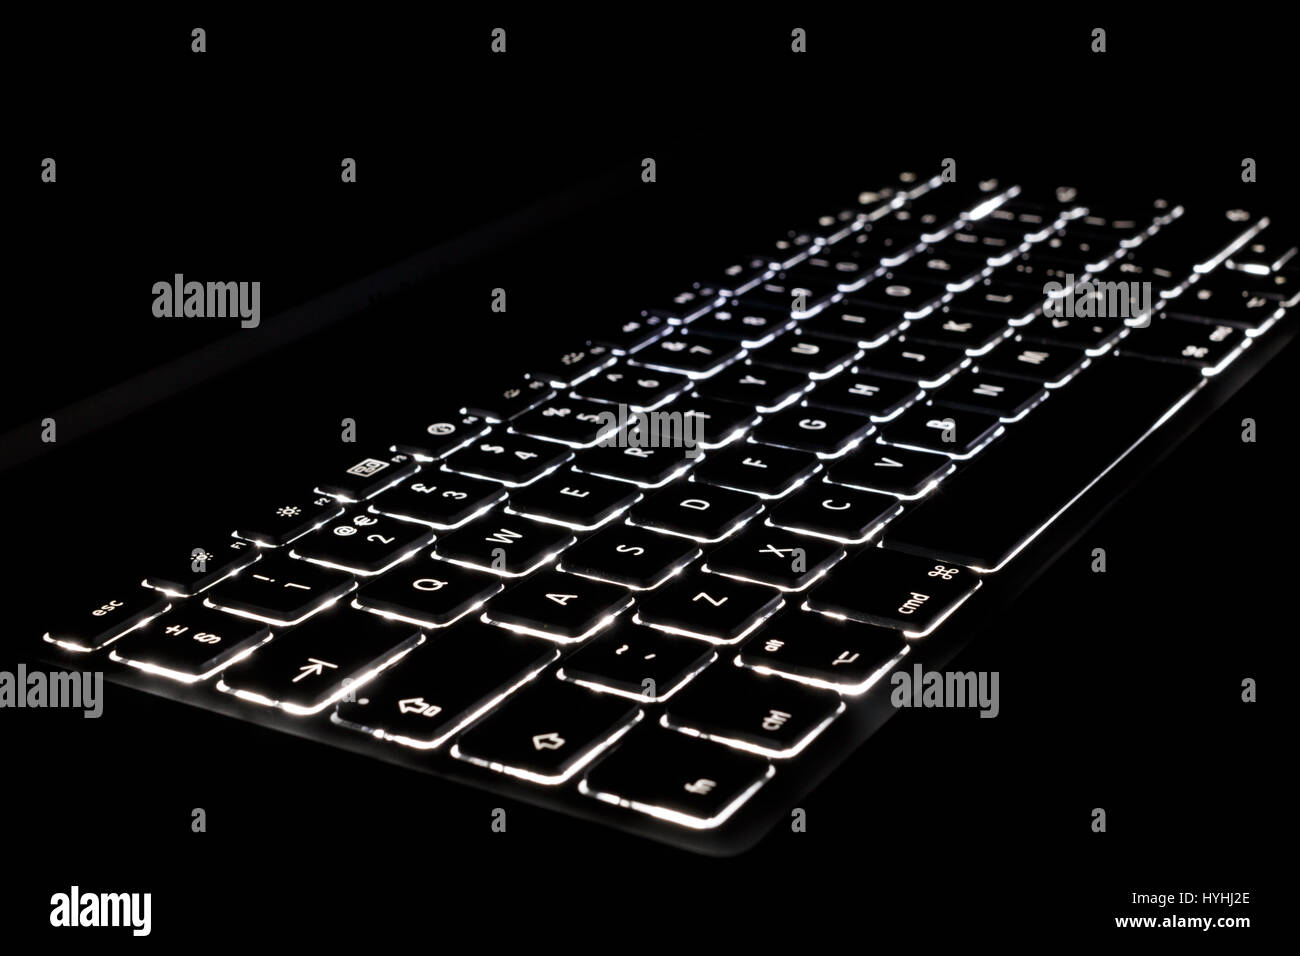 An illuminated keyboard on a black background Stock Photo